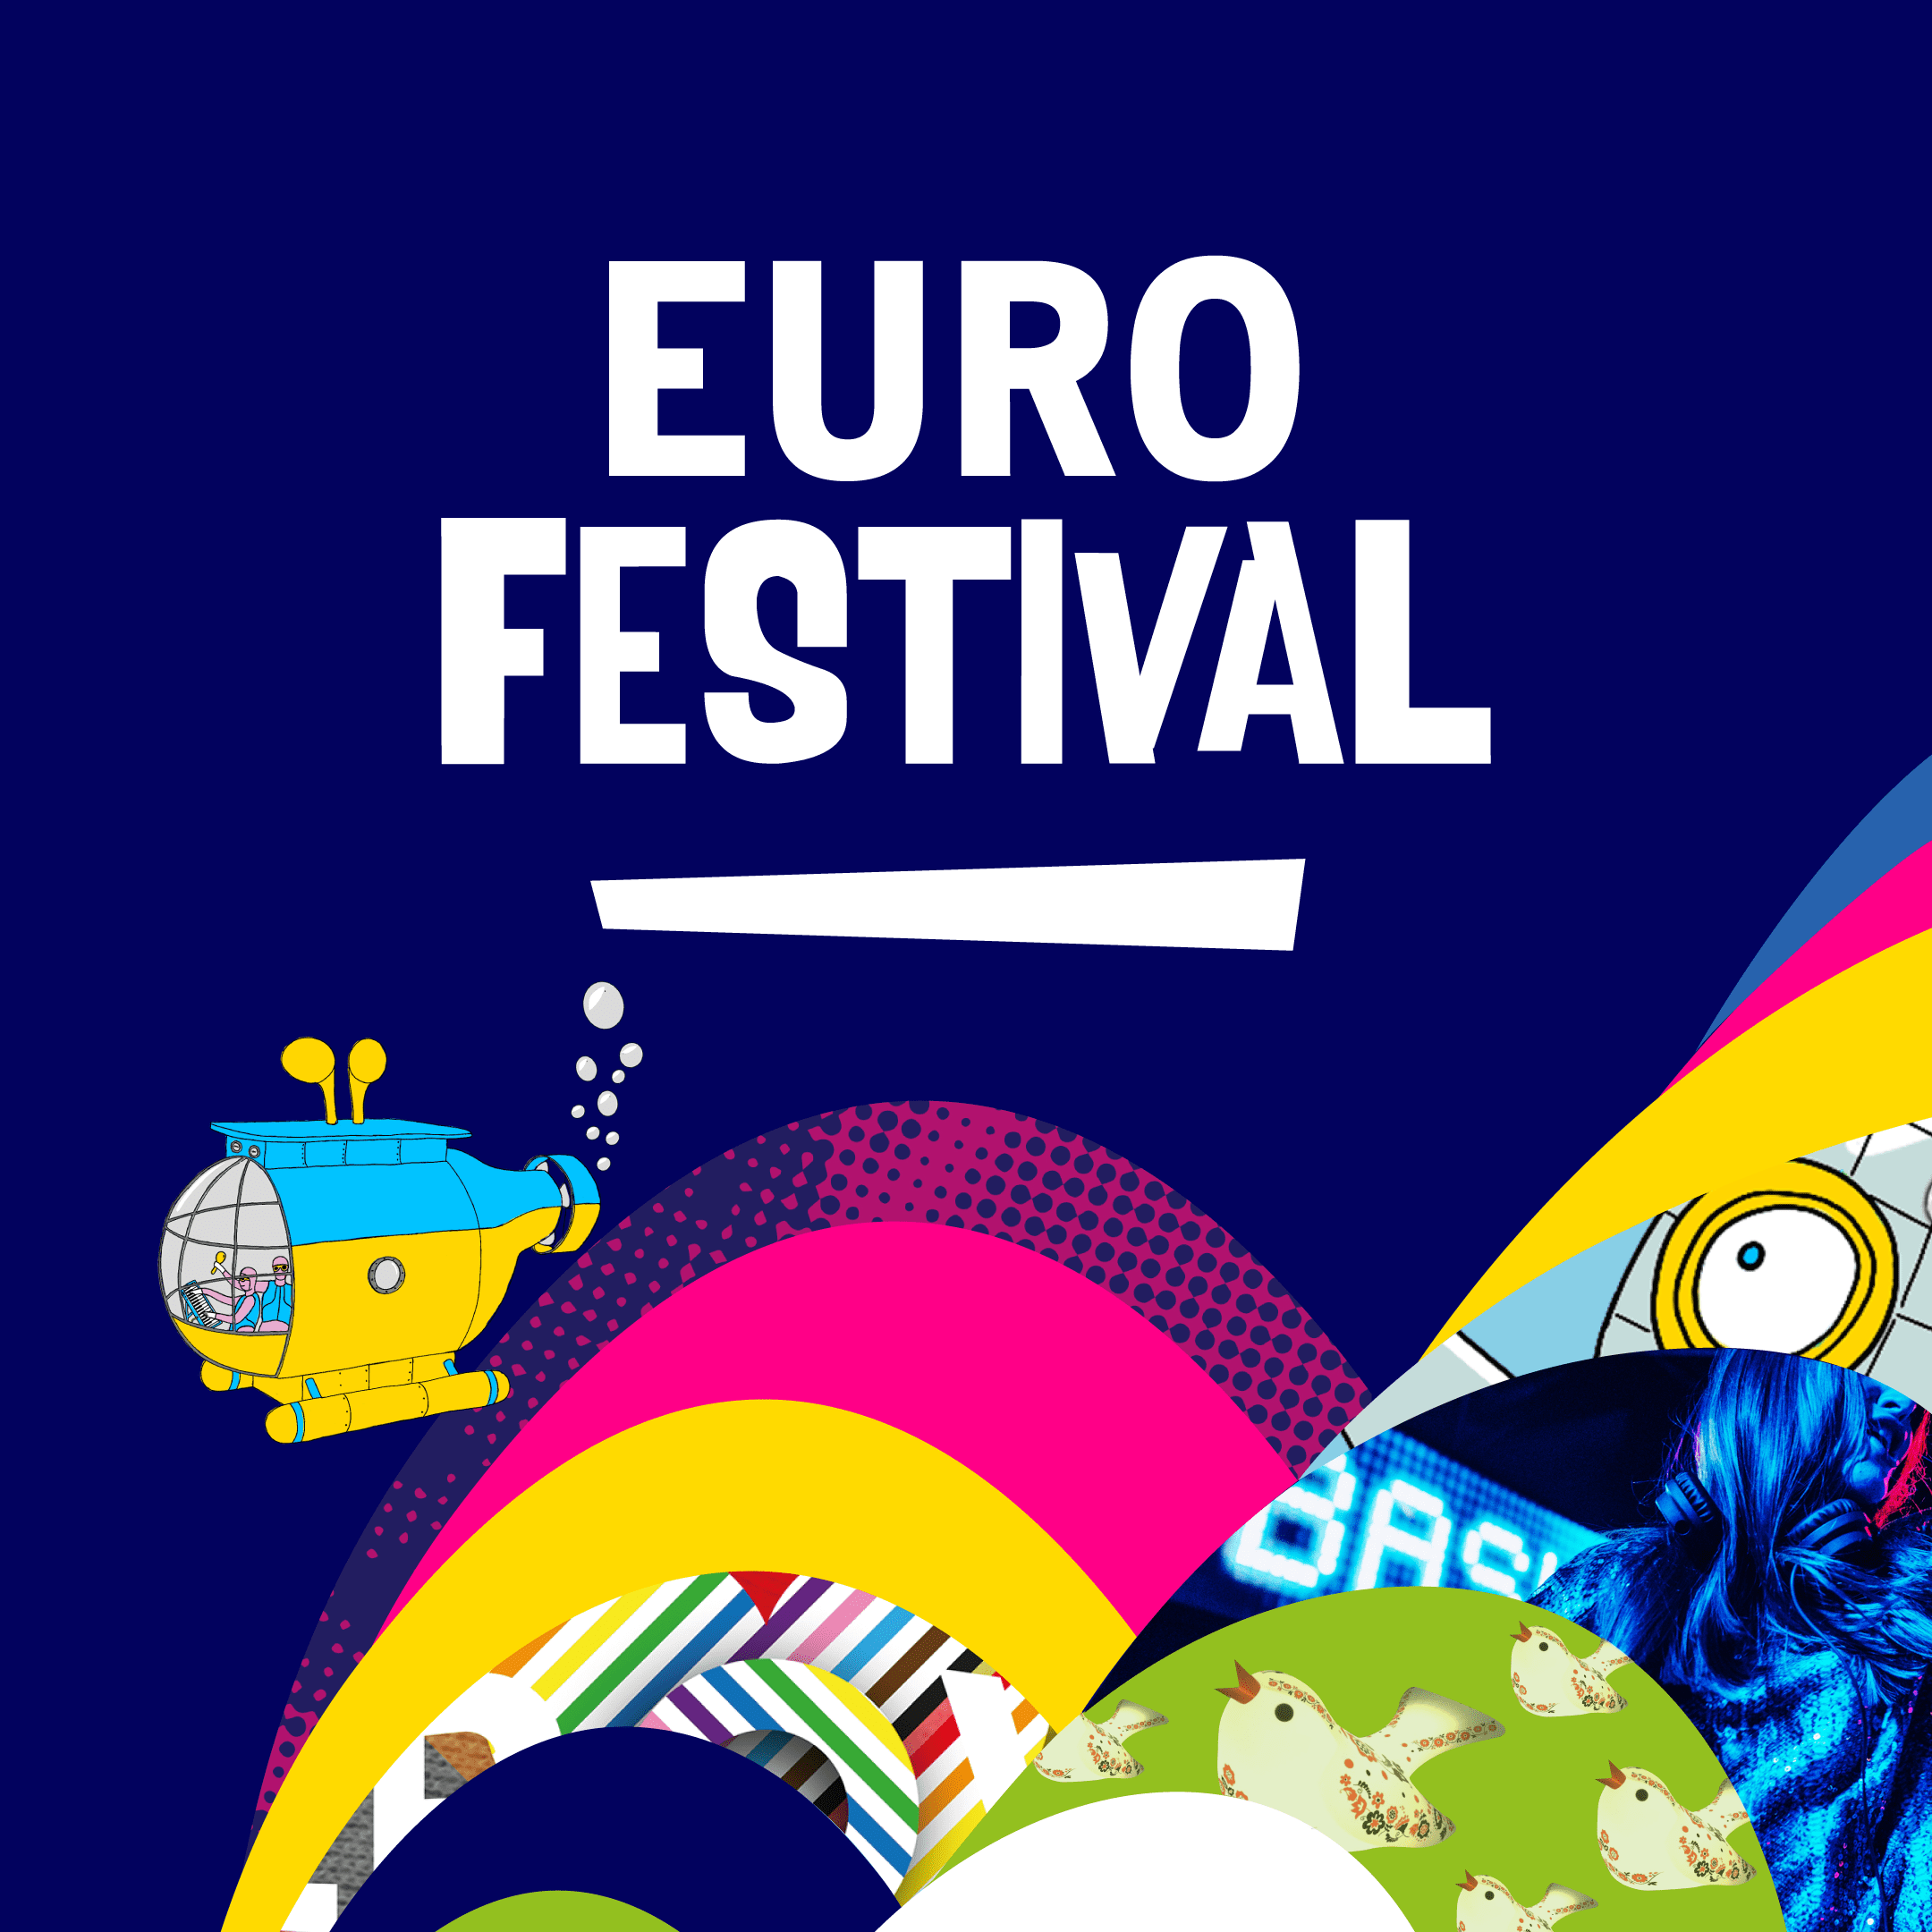 EuroFestival 1 - 14 May